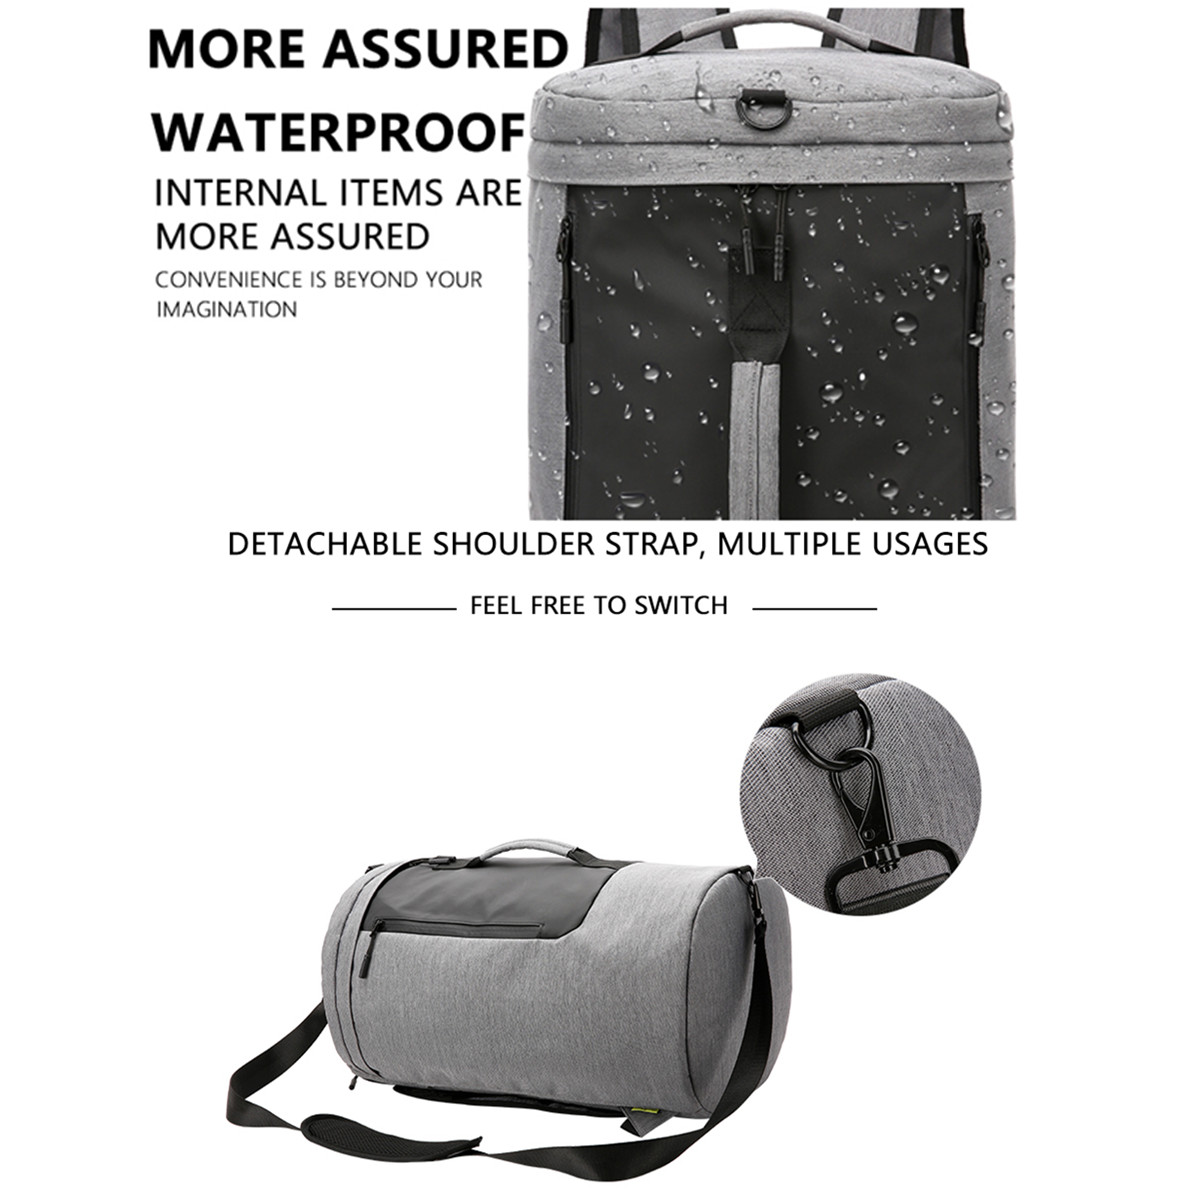 Travel Luggage Duffle Bag Lightweight Portable Handbag Fantasy Man With Wings Large Capacity Waterproof Foldable Storage Tote